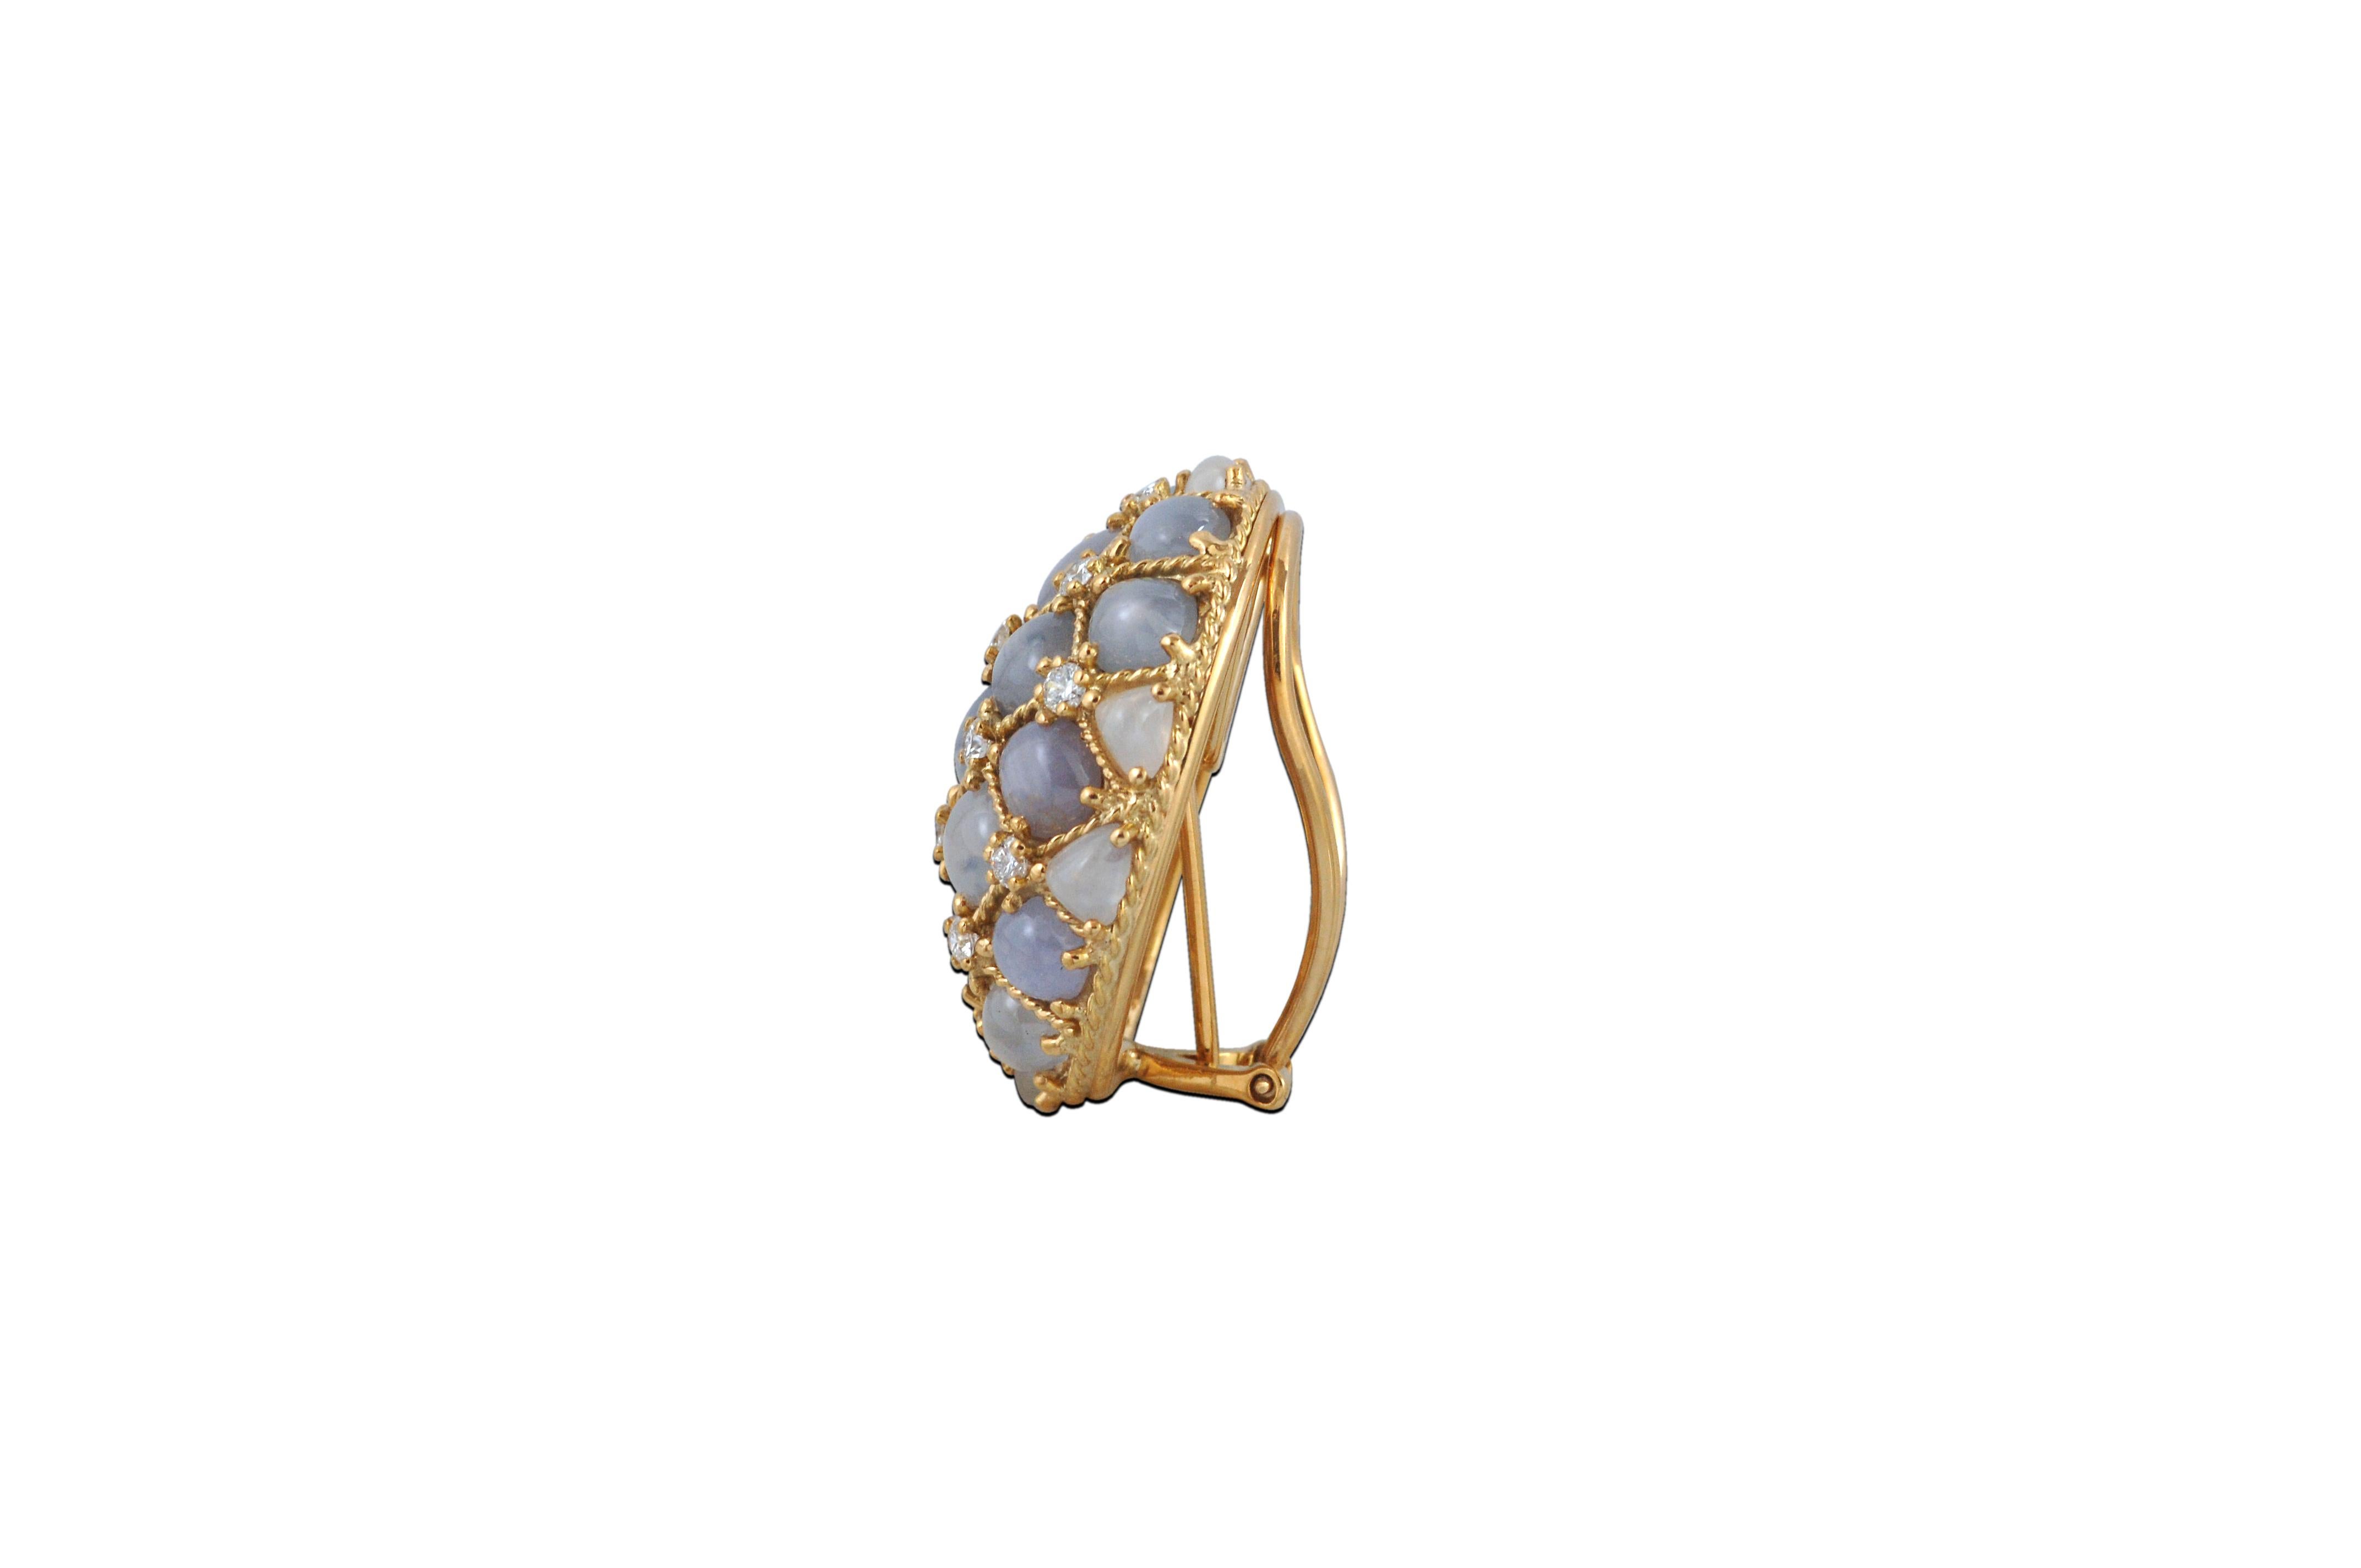 Star Sapphire 28.77 carats with Diamond 1.02 carats Earrings set in 18 Karat Gold Settings 


Width: 2.0 cm
Length: 2.5 cm  

